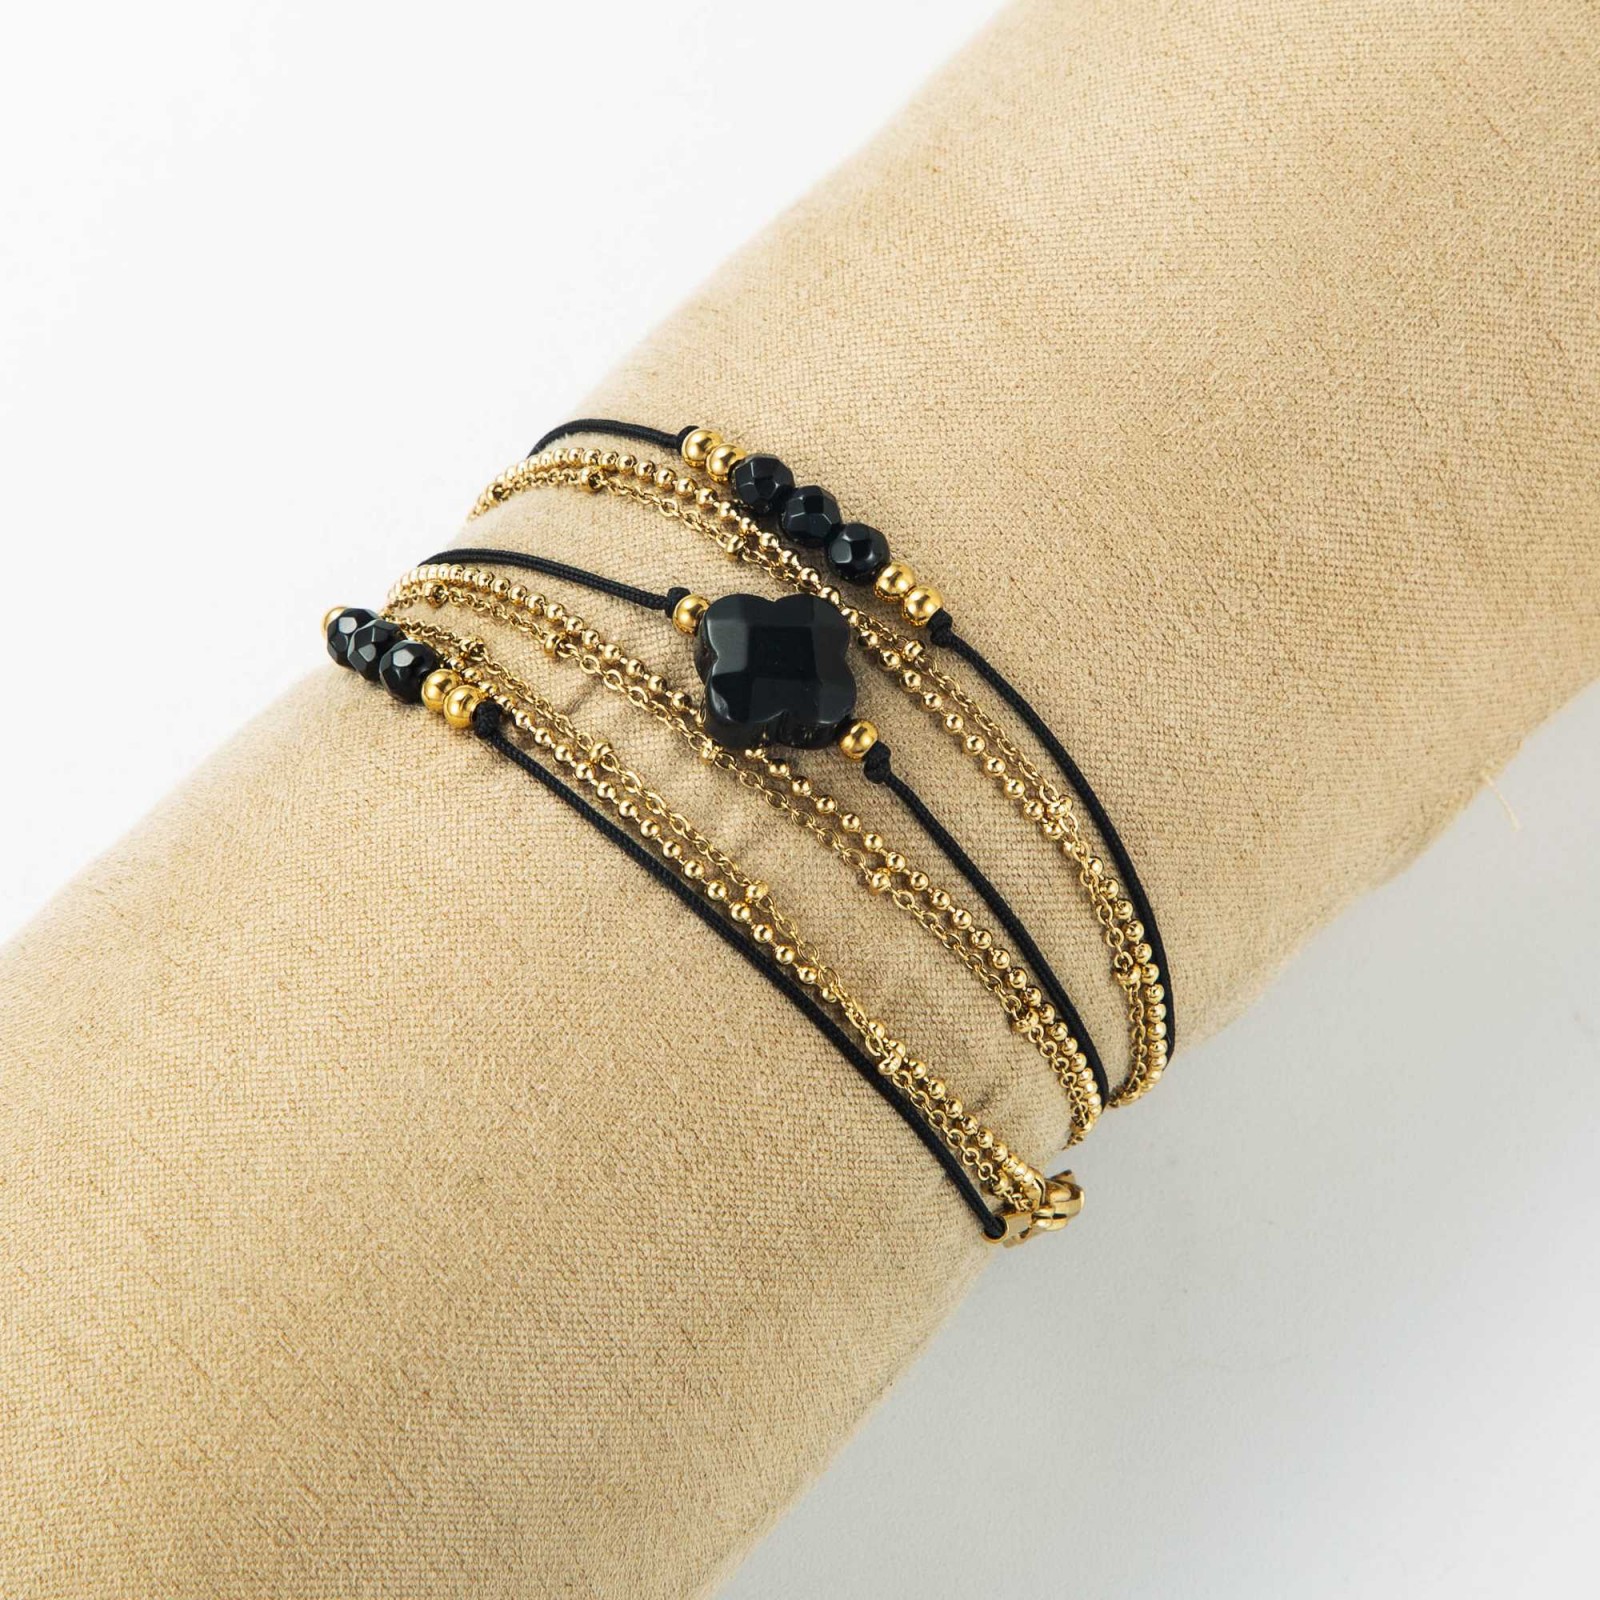 Stainless Steel Chain Bracelet Color:Black Gold